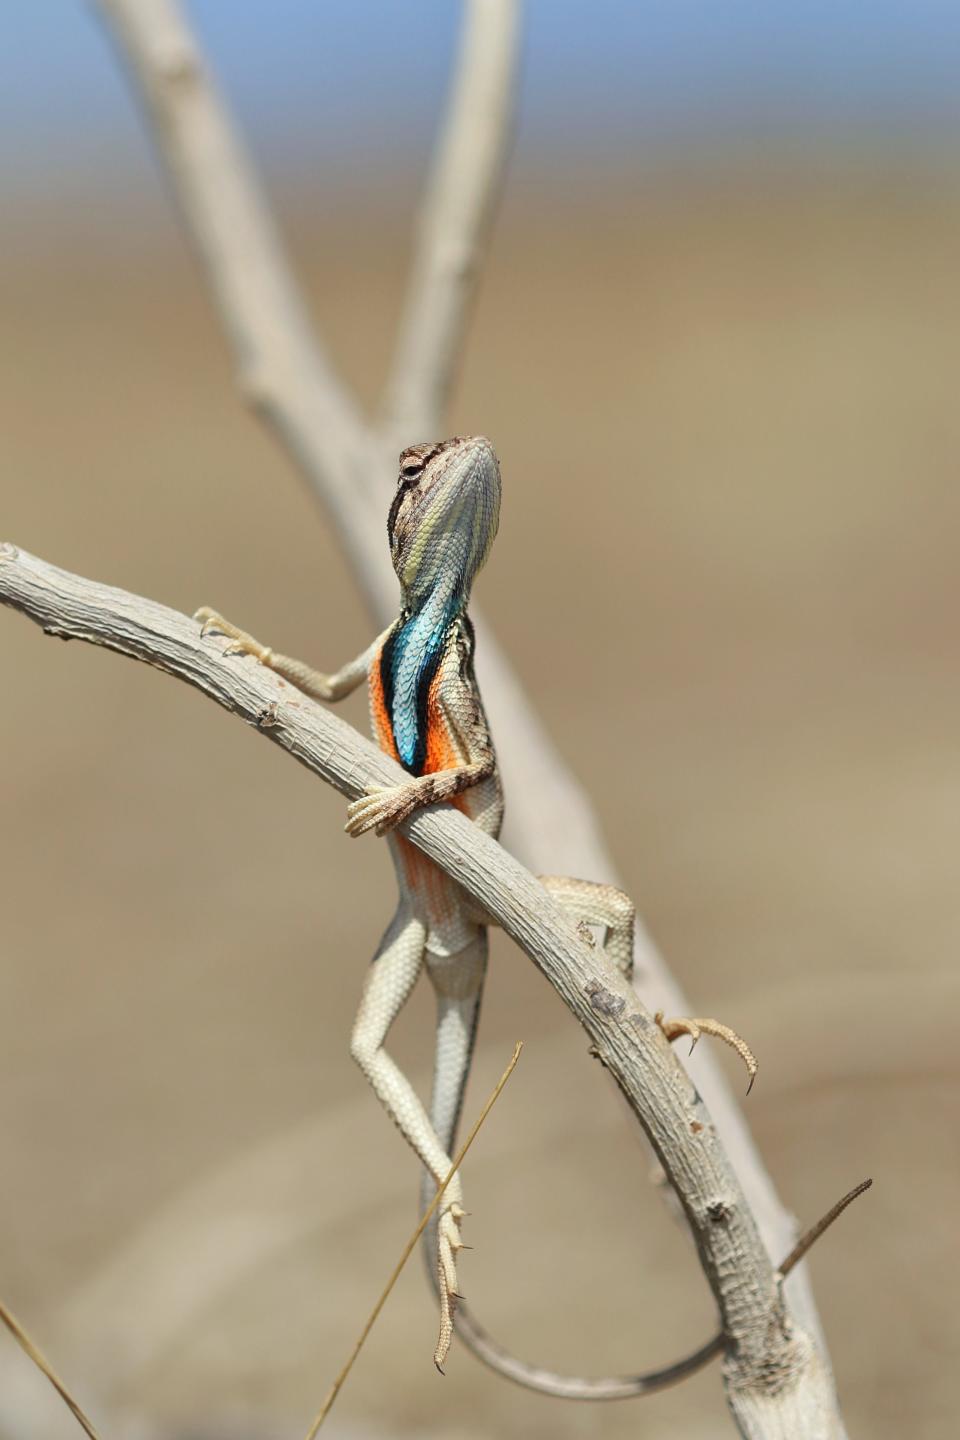 A fan throated lizard poses on a tree branch.